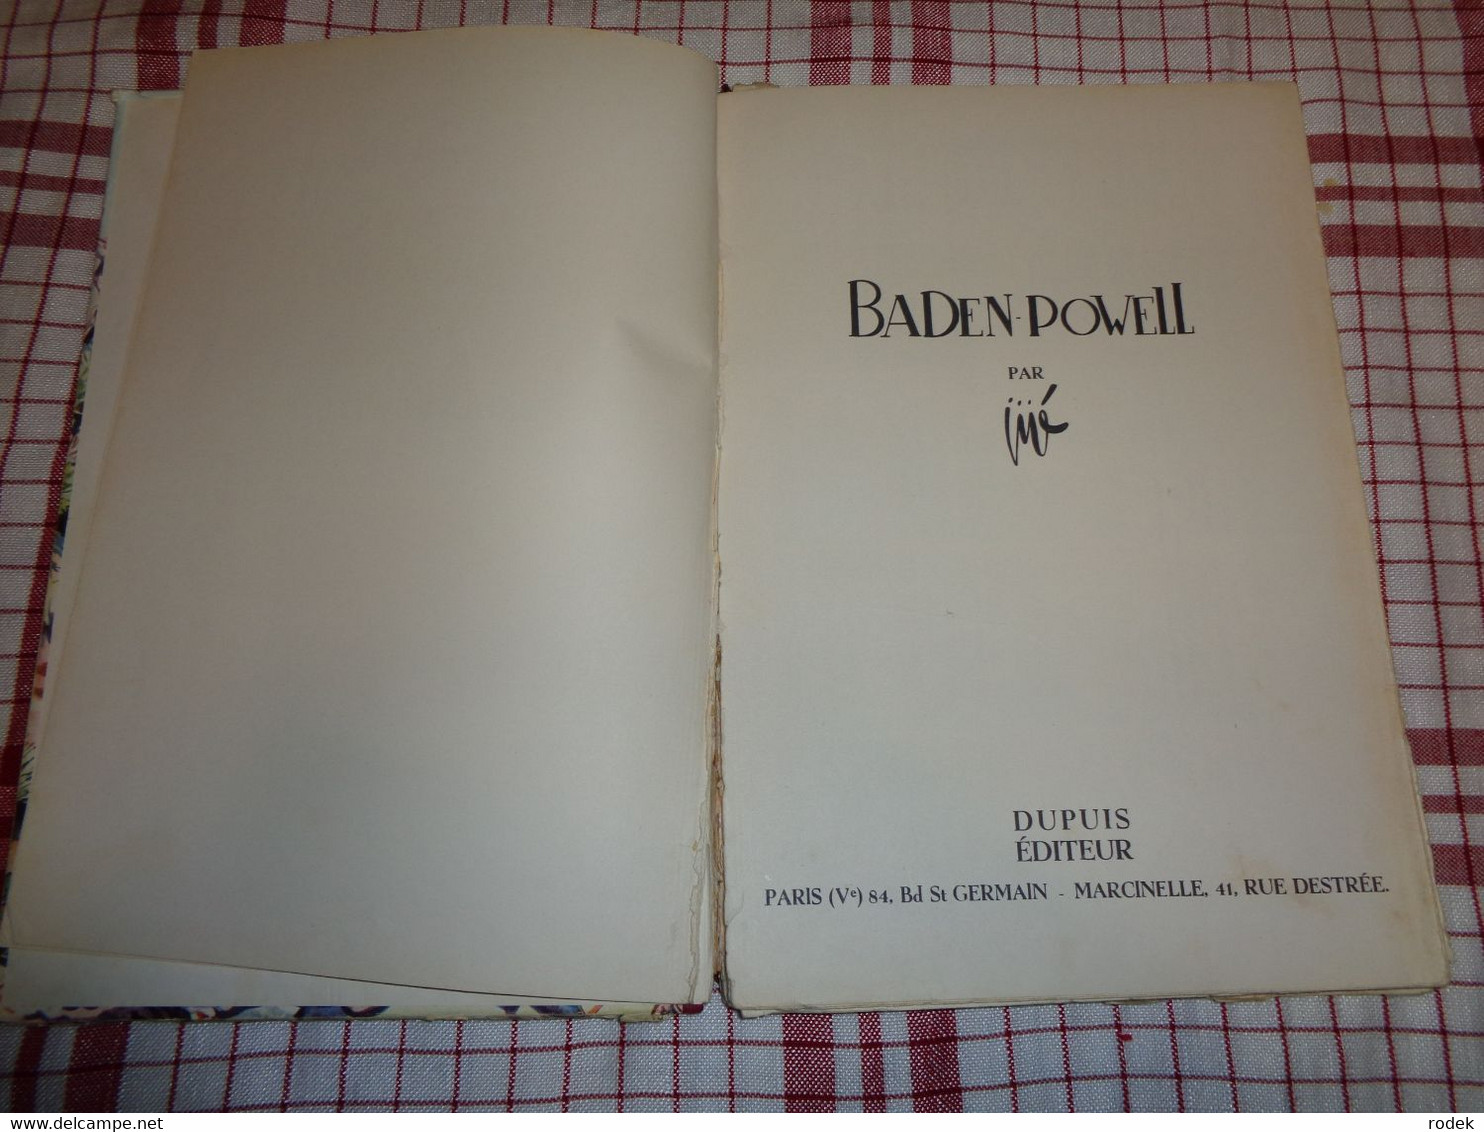 Baden Powell par Jijé Edition Originale de 1950